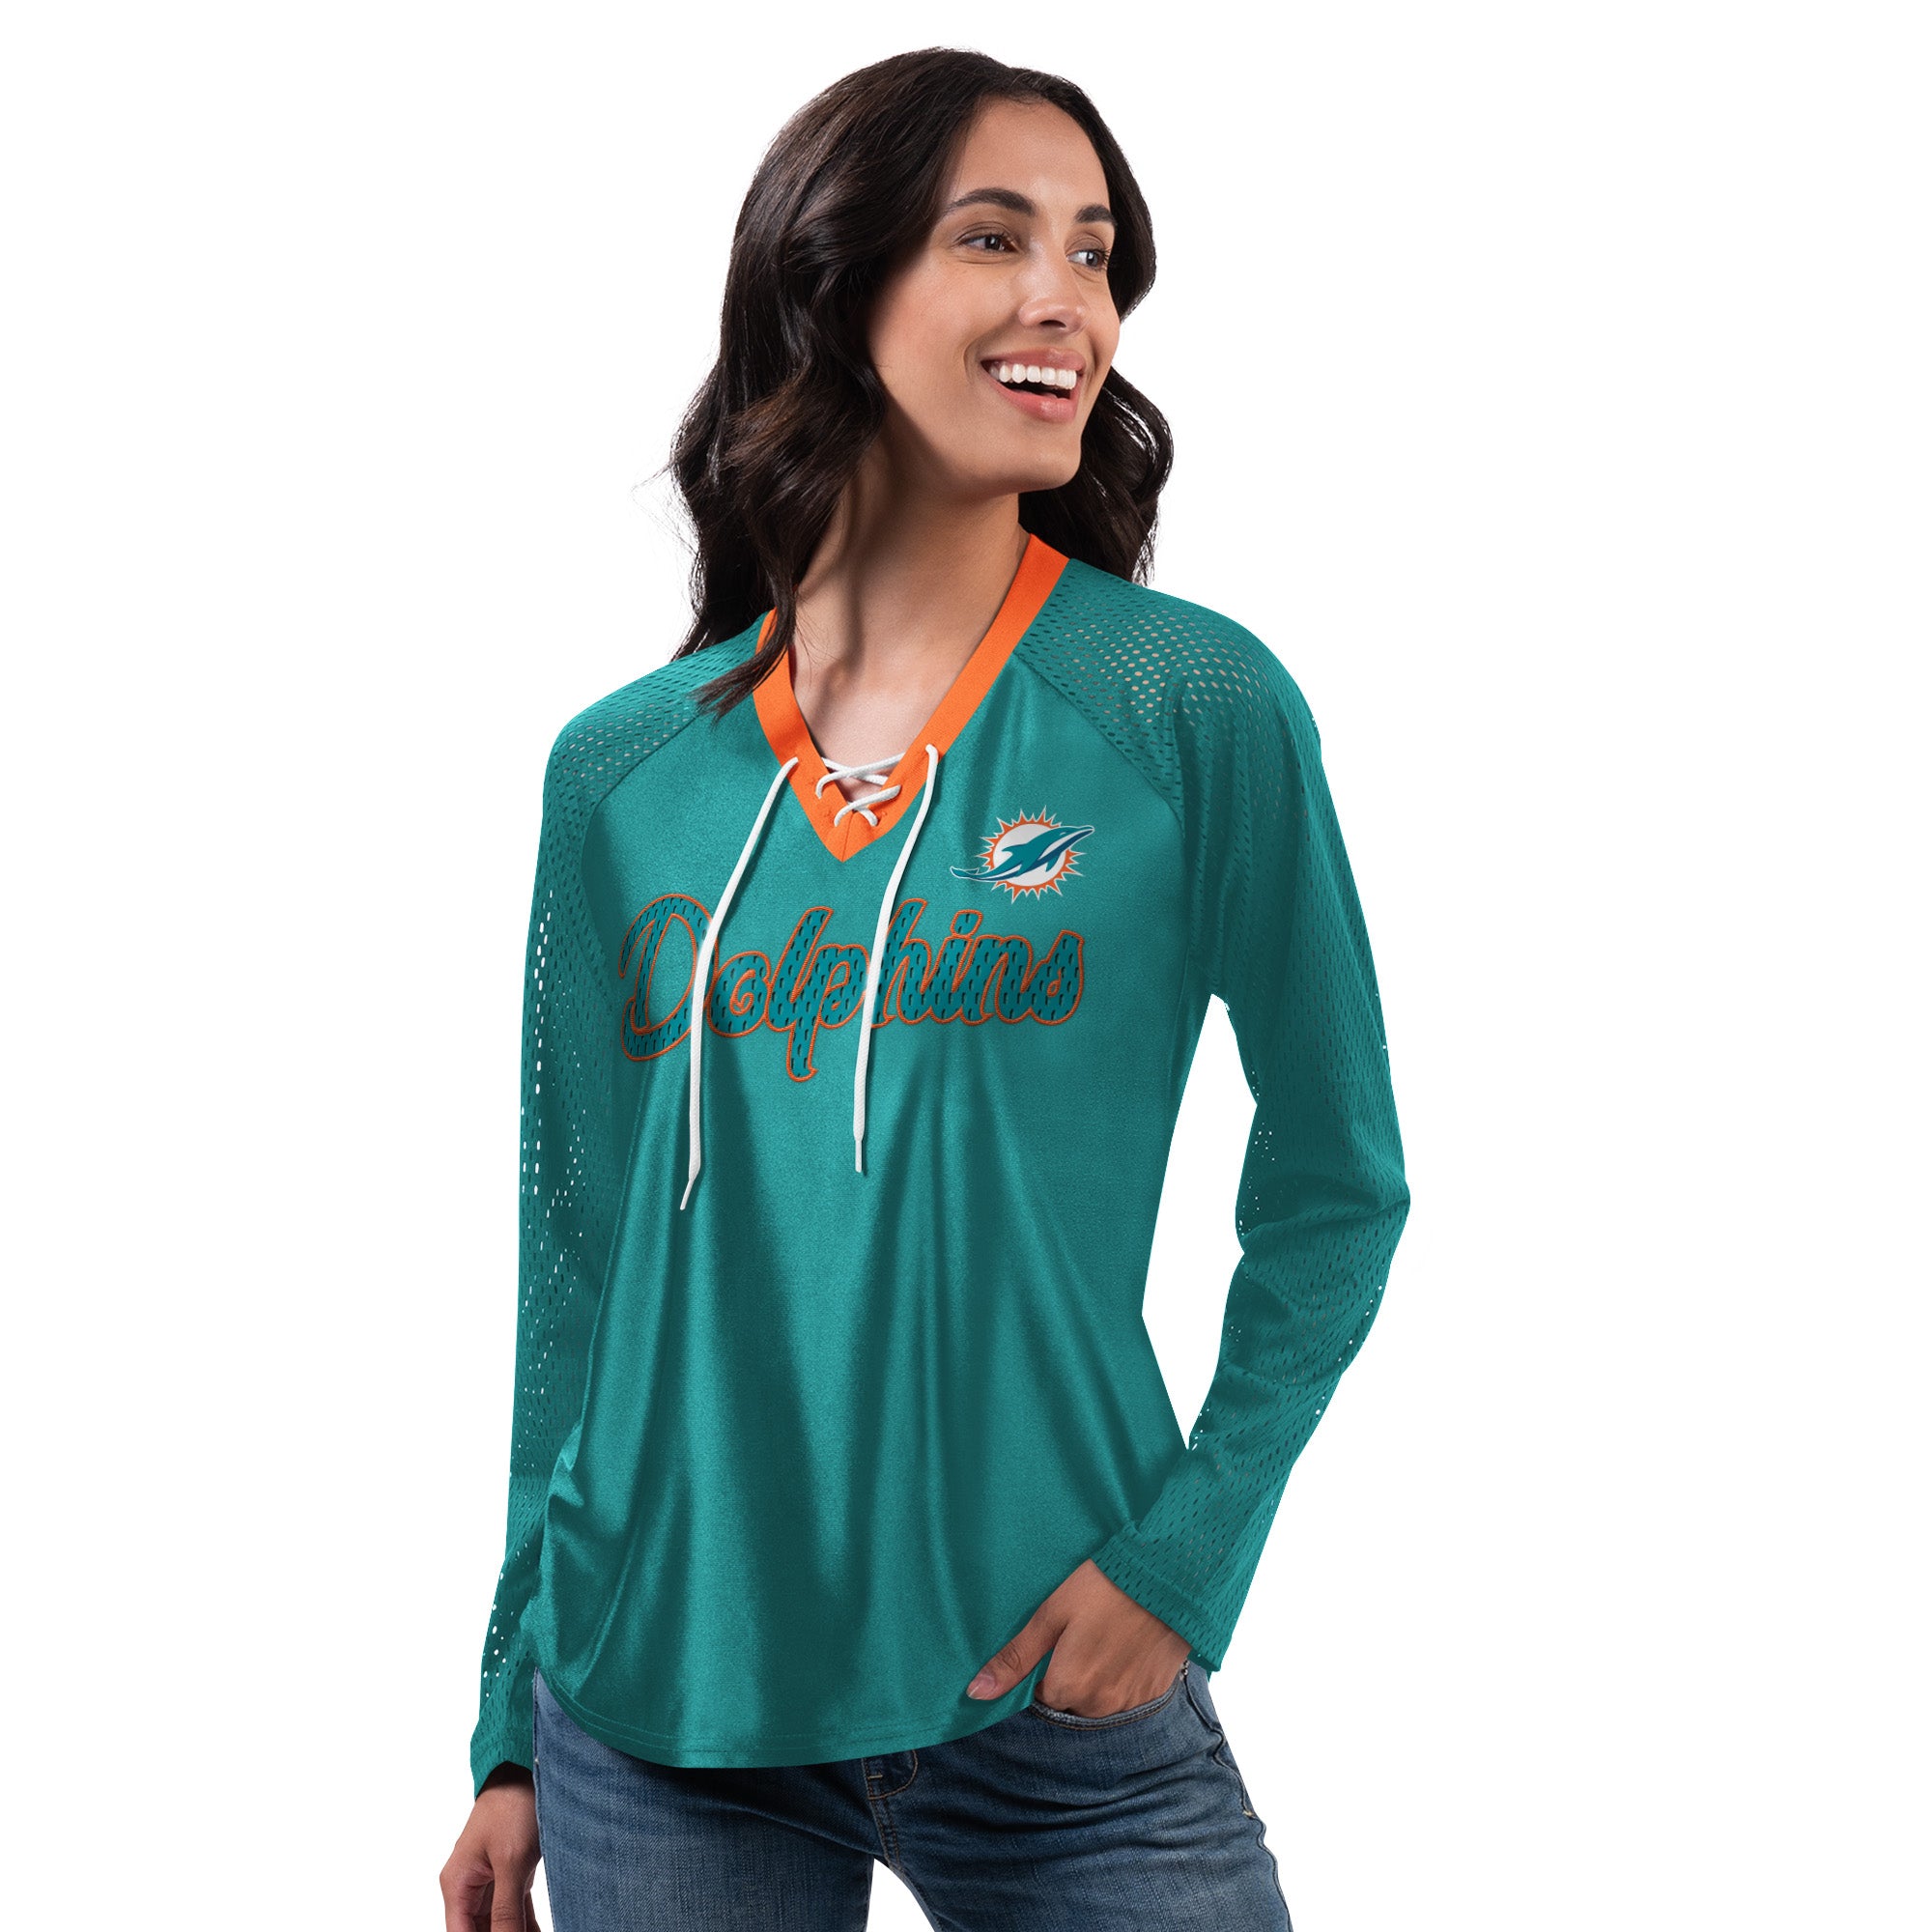 Miami Dolphins G-lll 4Her Women's Arquero L/S Mesh Jersey Shirt  - Aqua